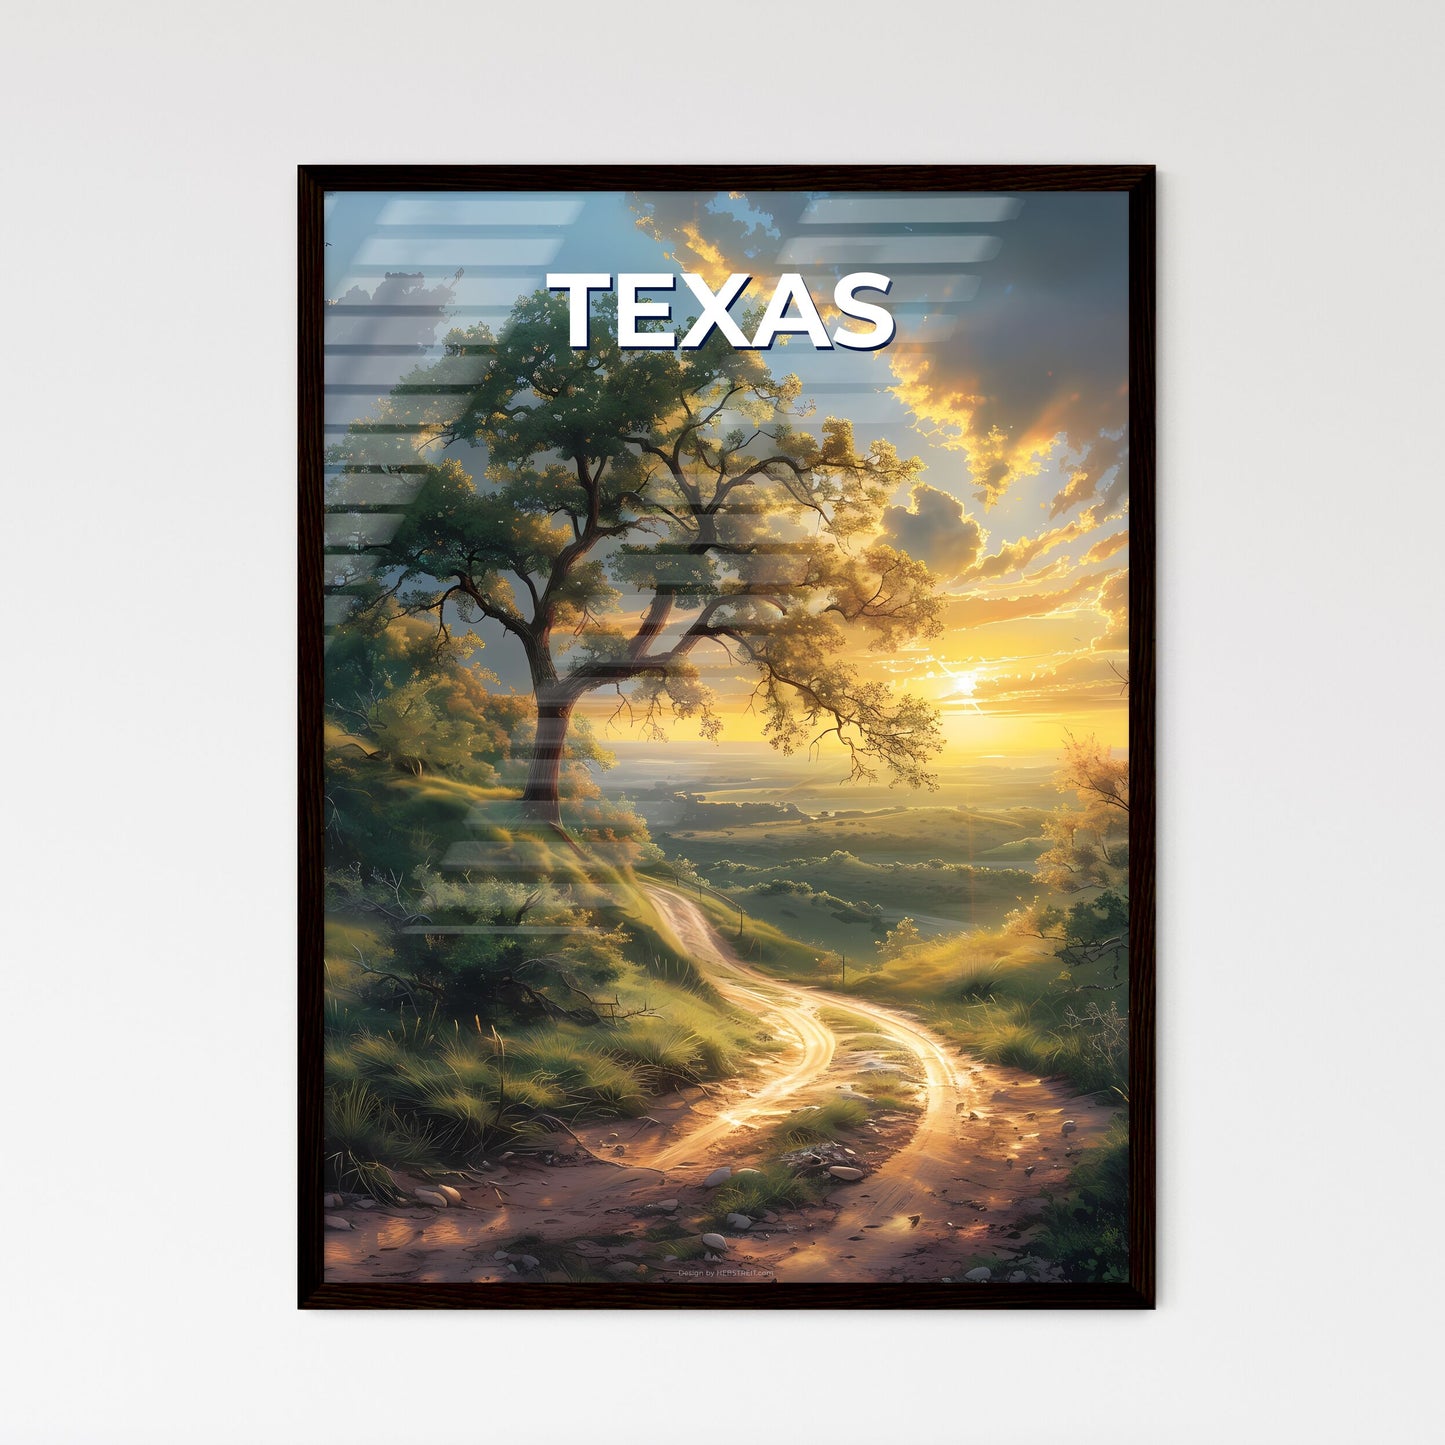 Texas Lone Tree Landscape Painting Dirt Road Vibrant Colors Art Decor